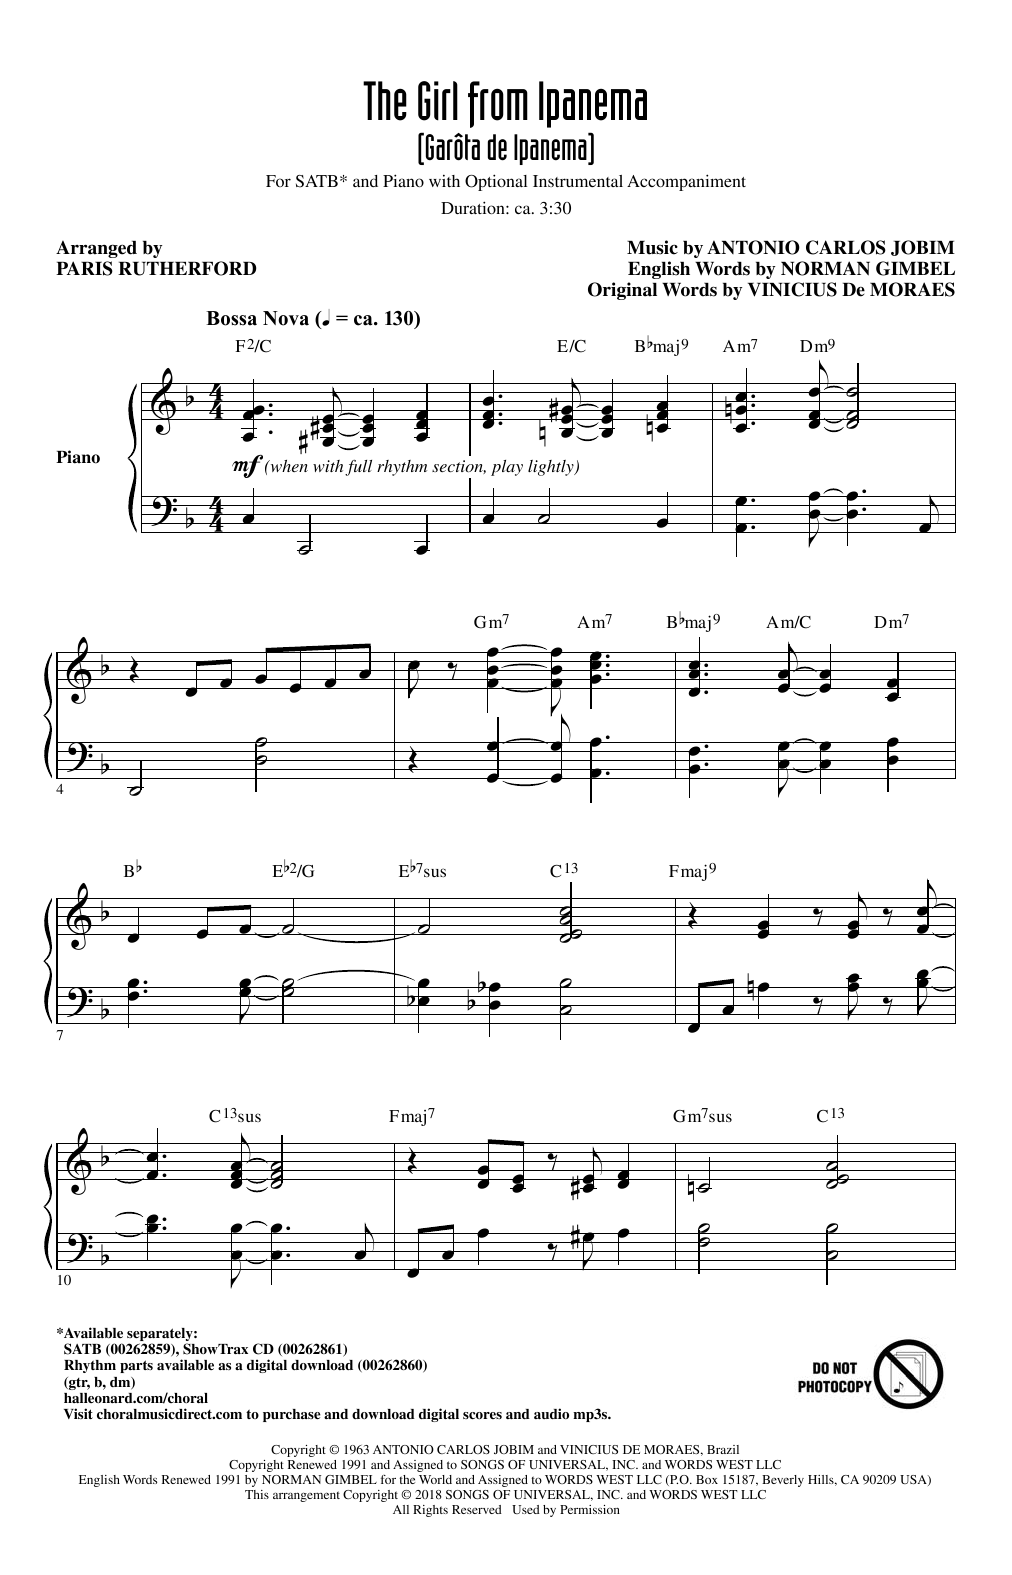 Paris Rutherford The Girl From Ipanema (Garota De Ipanema) Sheet Music Notes & Chords for SATB - Download or Print PDF